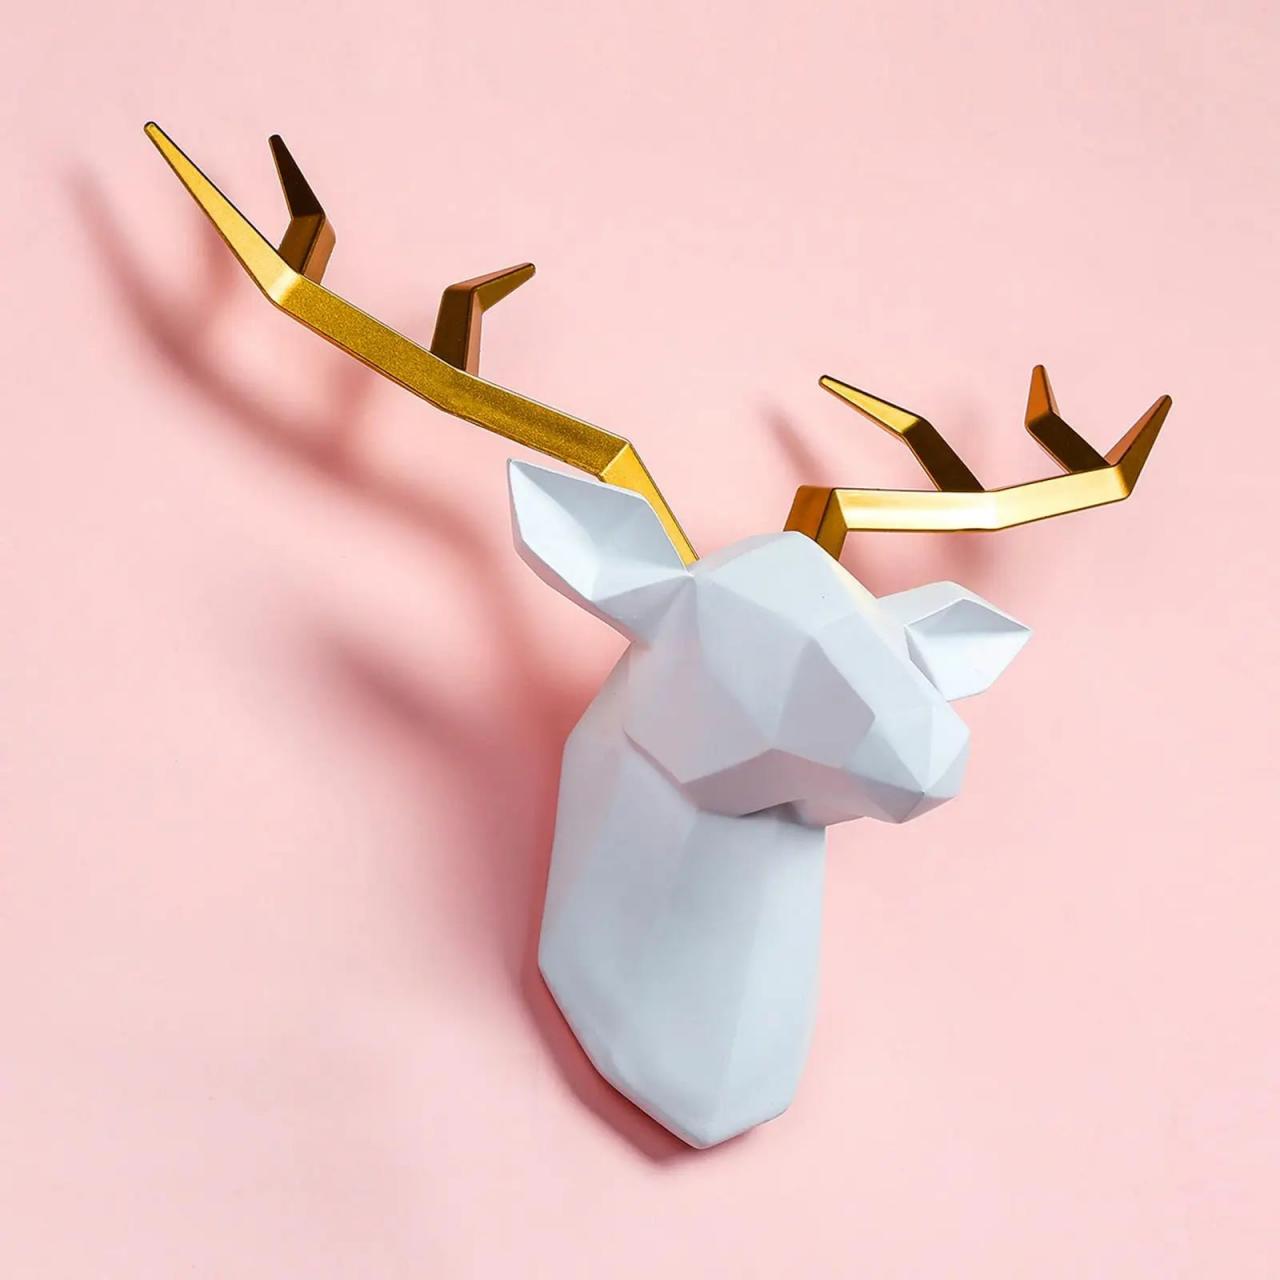 Geometric Deer Head Wall Sculpture With Golden Antlers